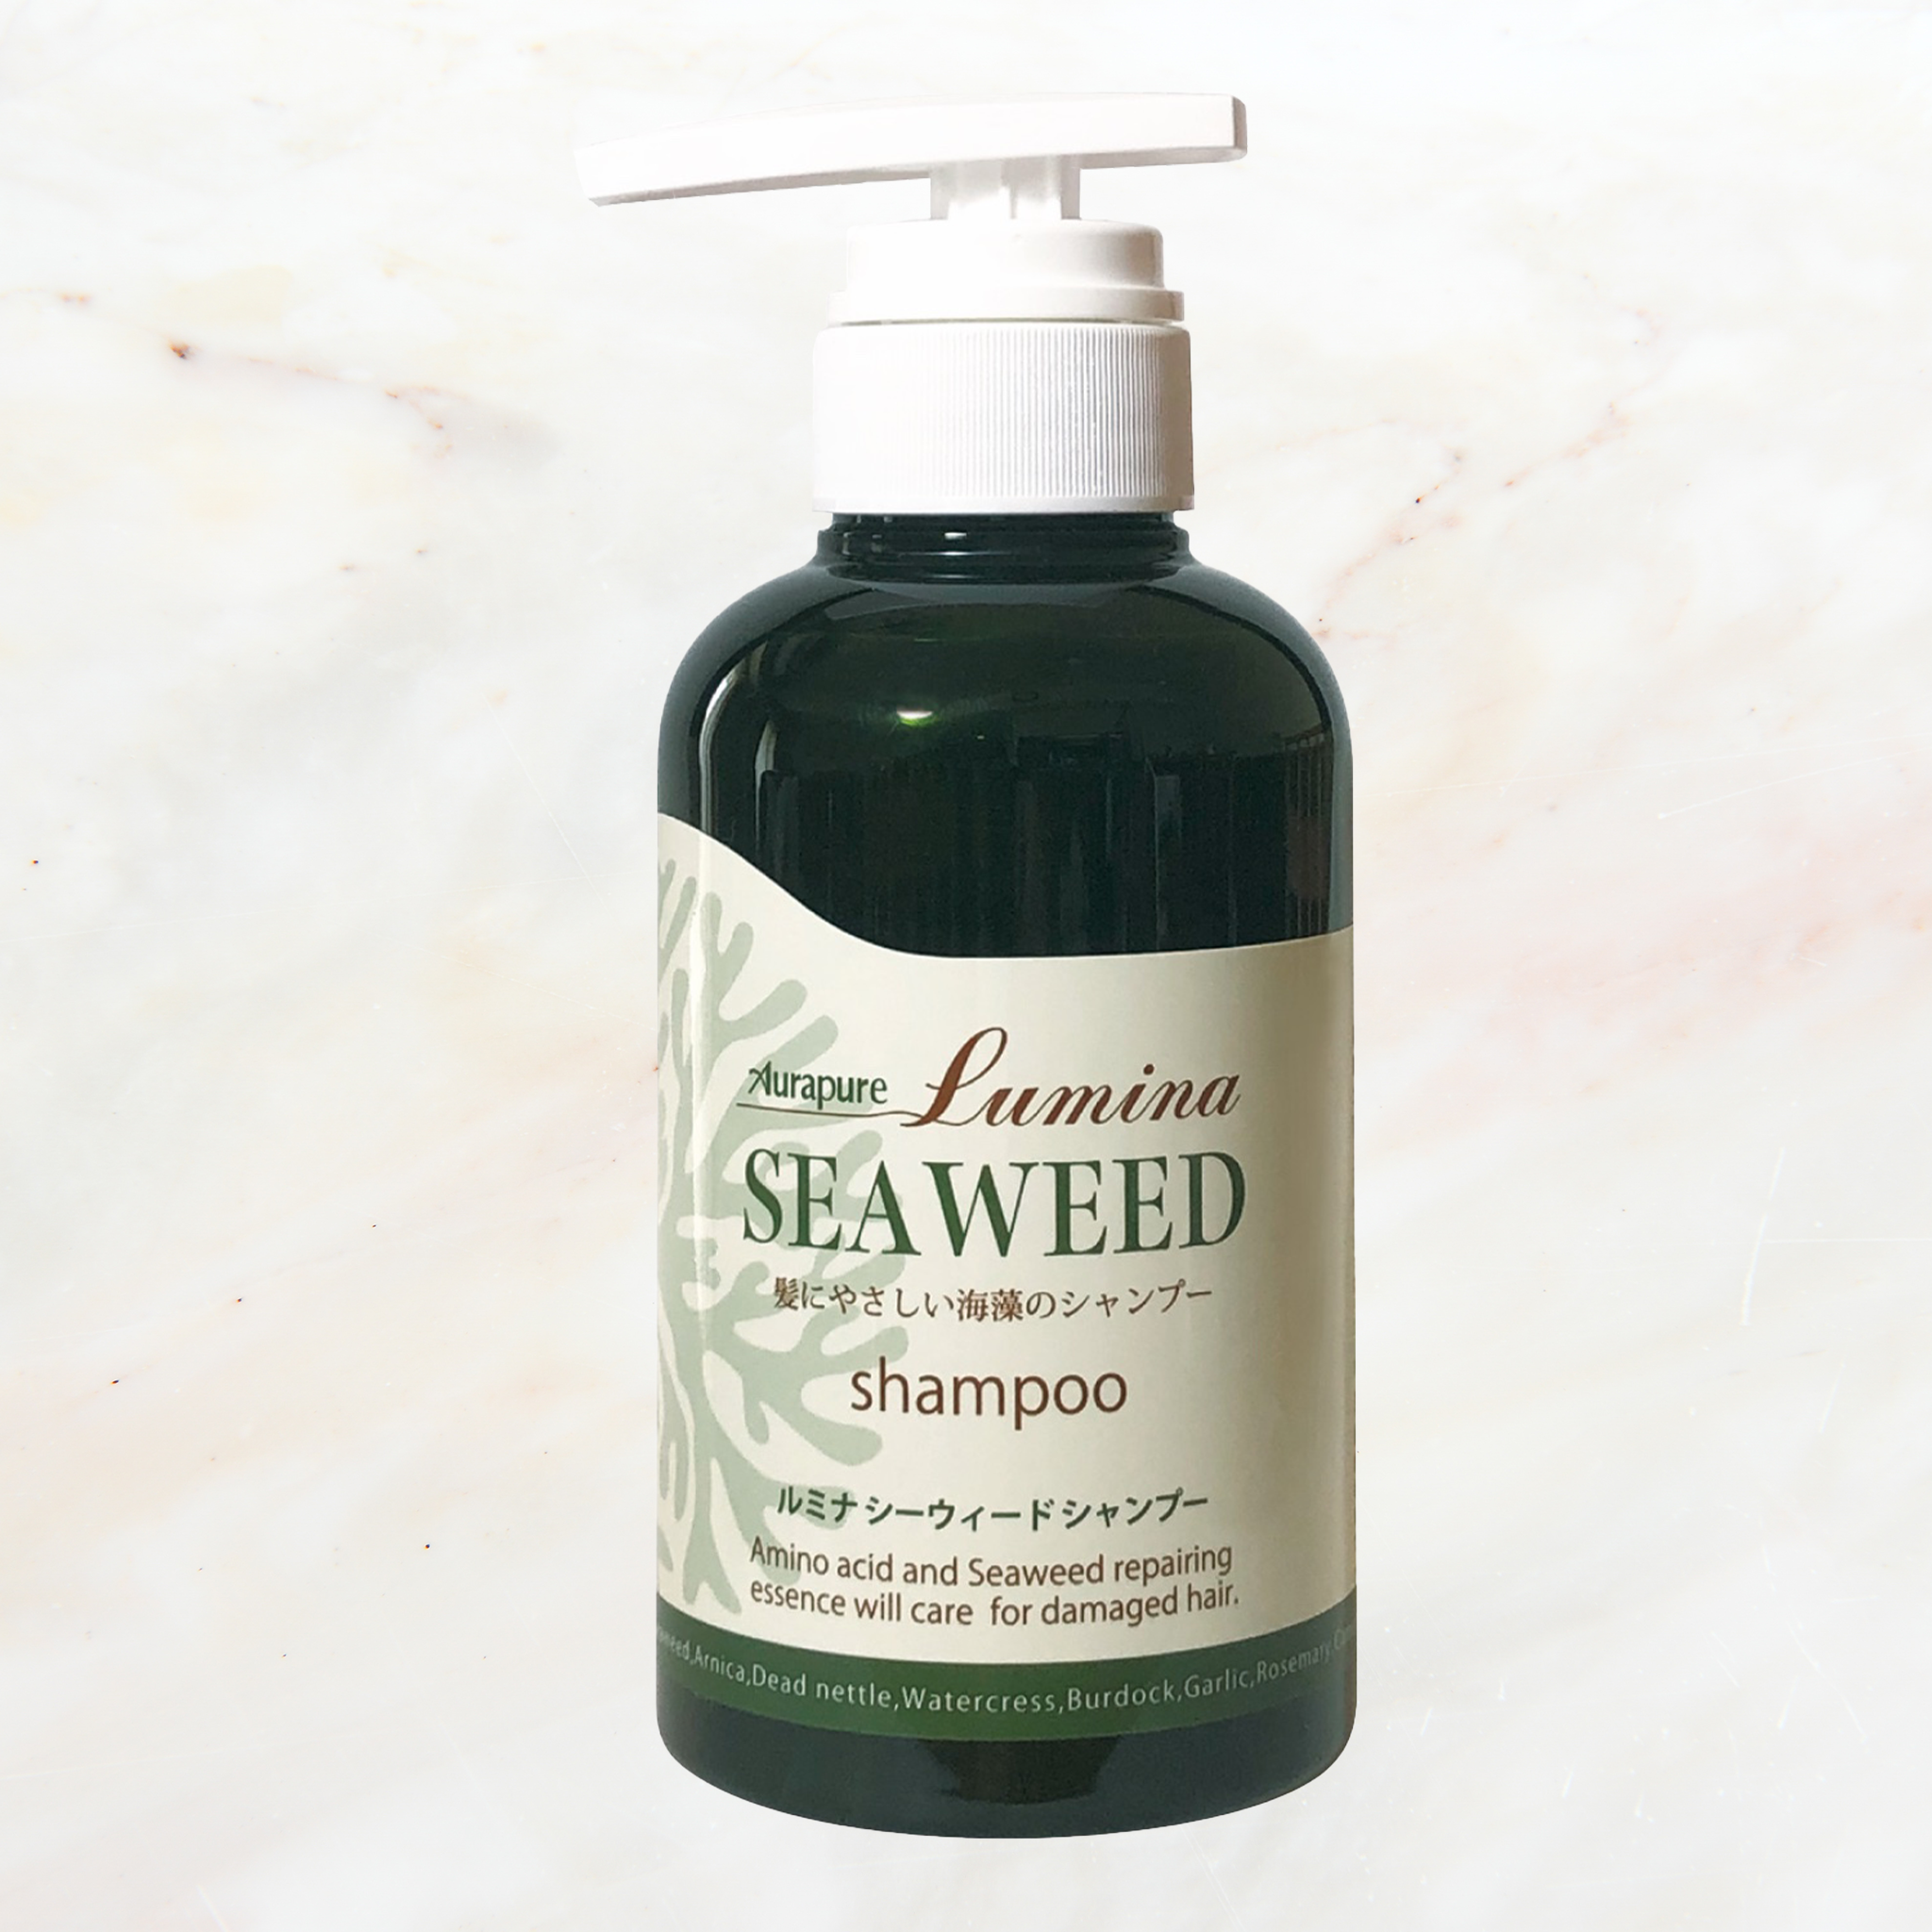 本頁圖片/檔案 - Seaweed Shampoo wMablebg copy